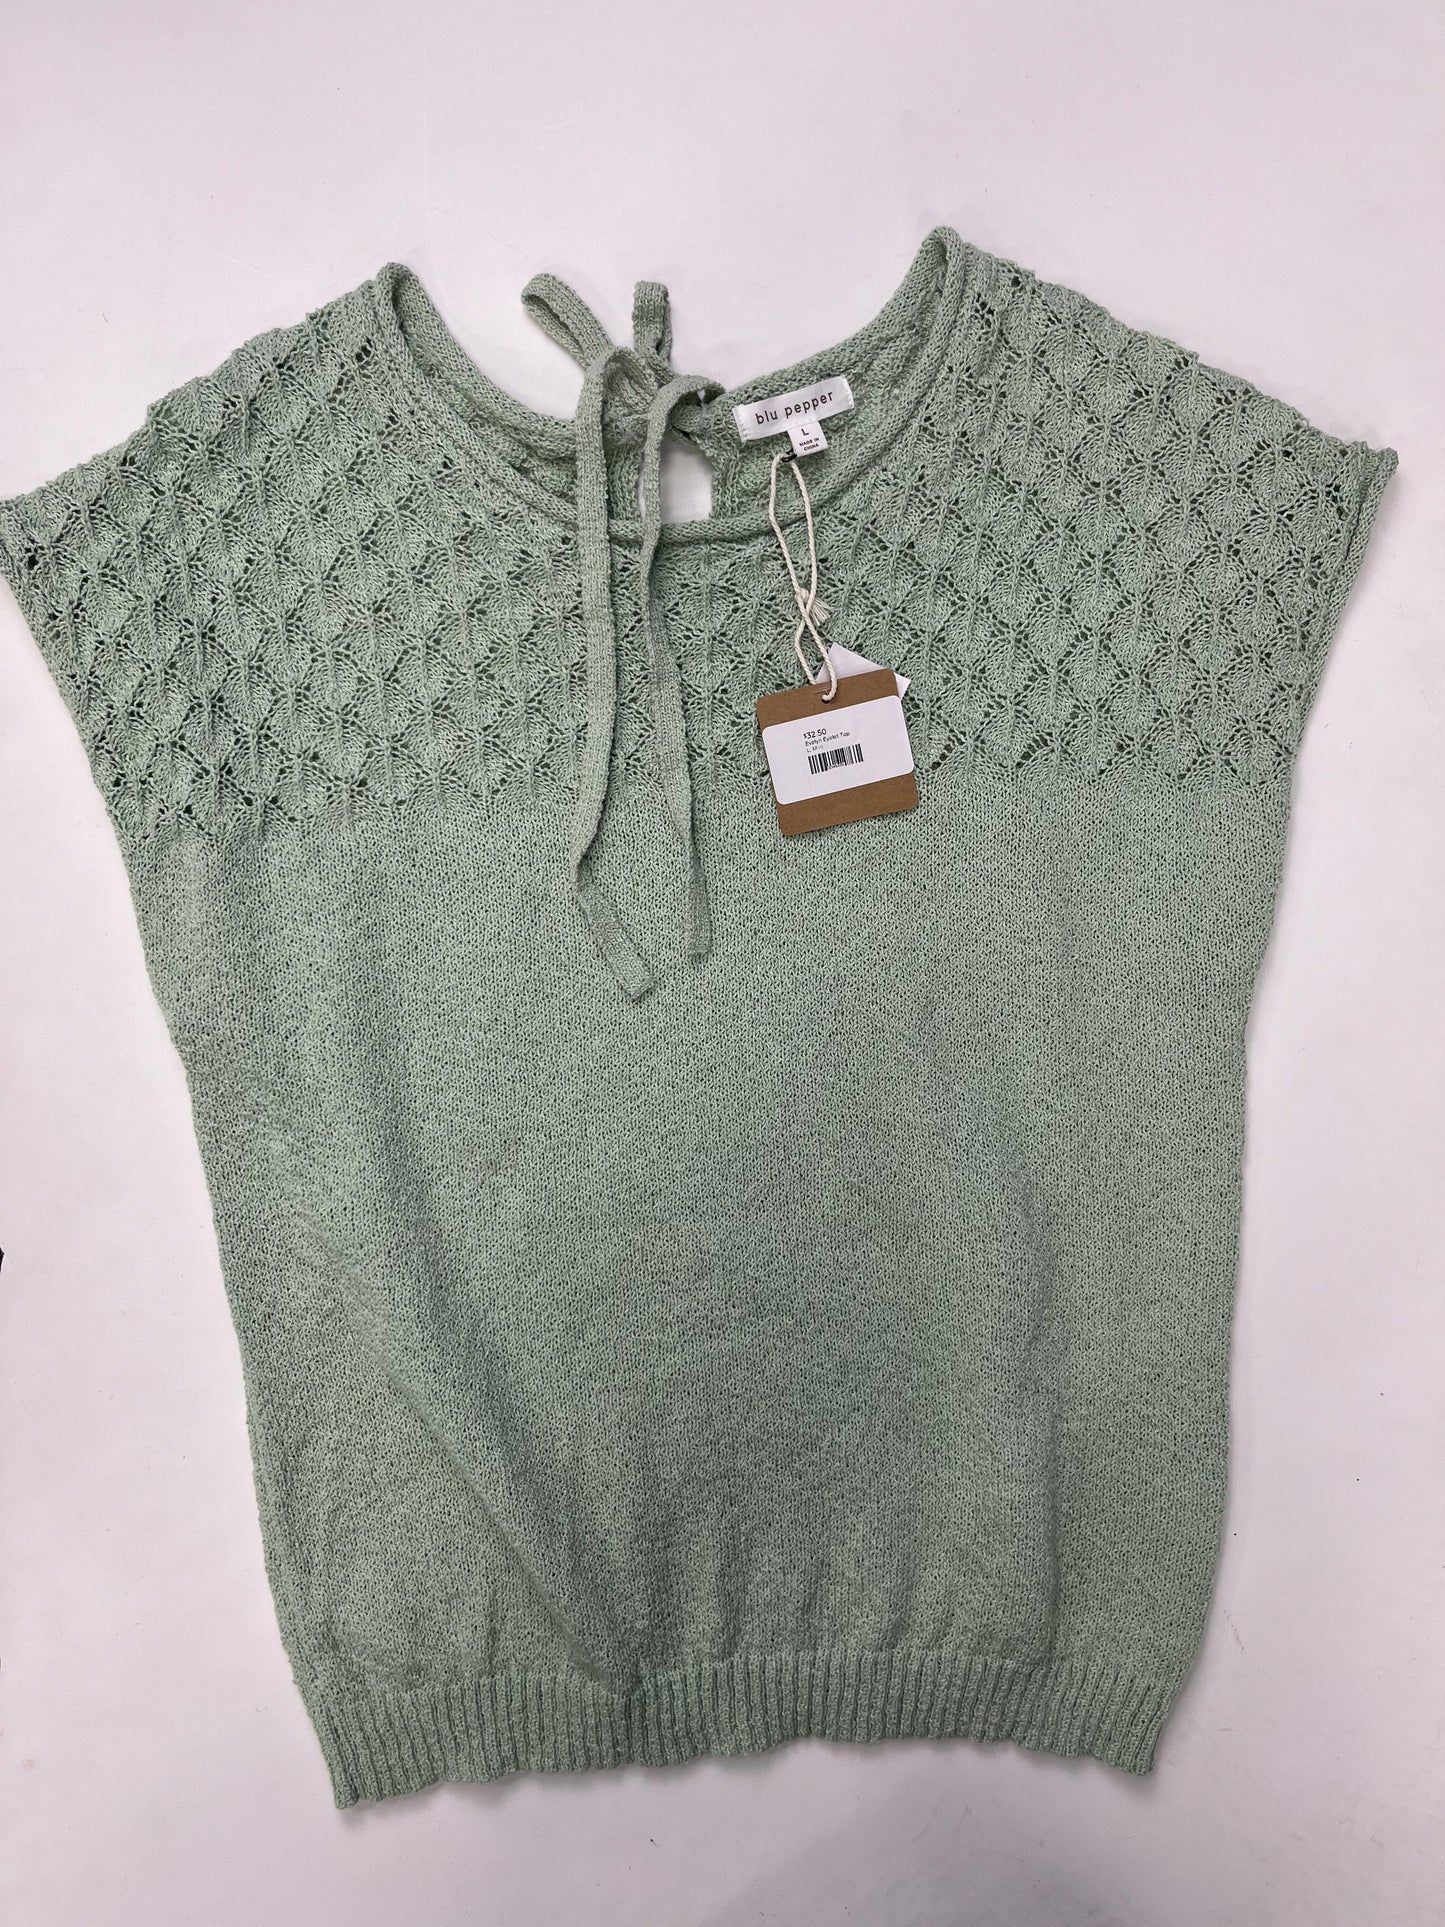 Green Sweater Short Sleeve Blu Pepper, Size L